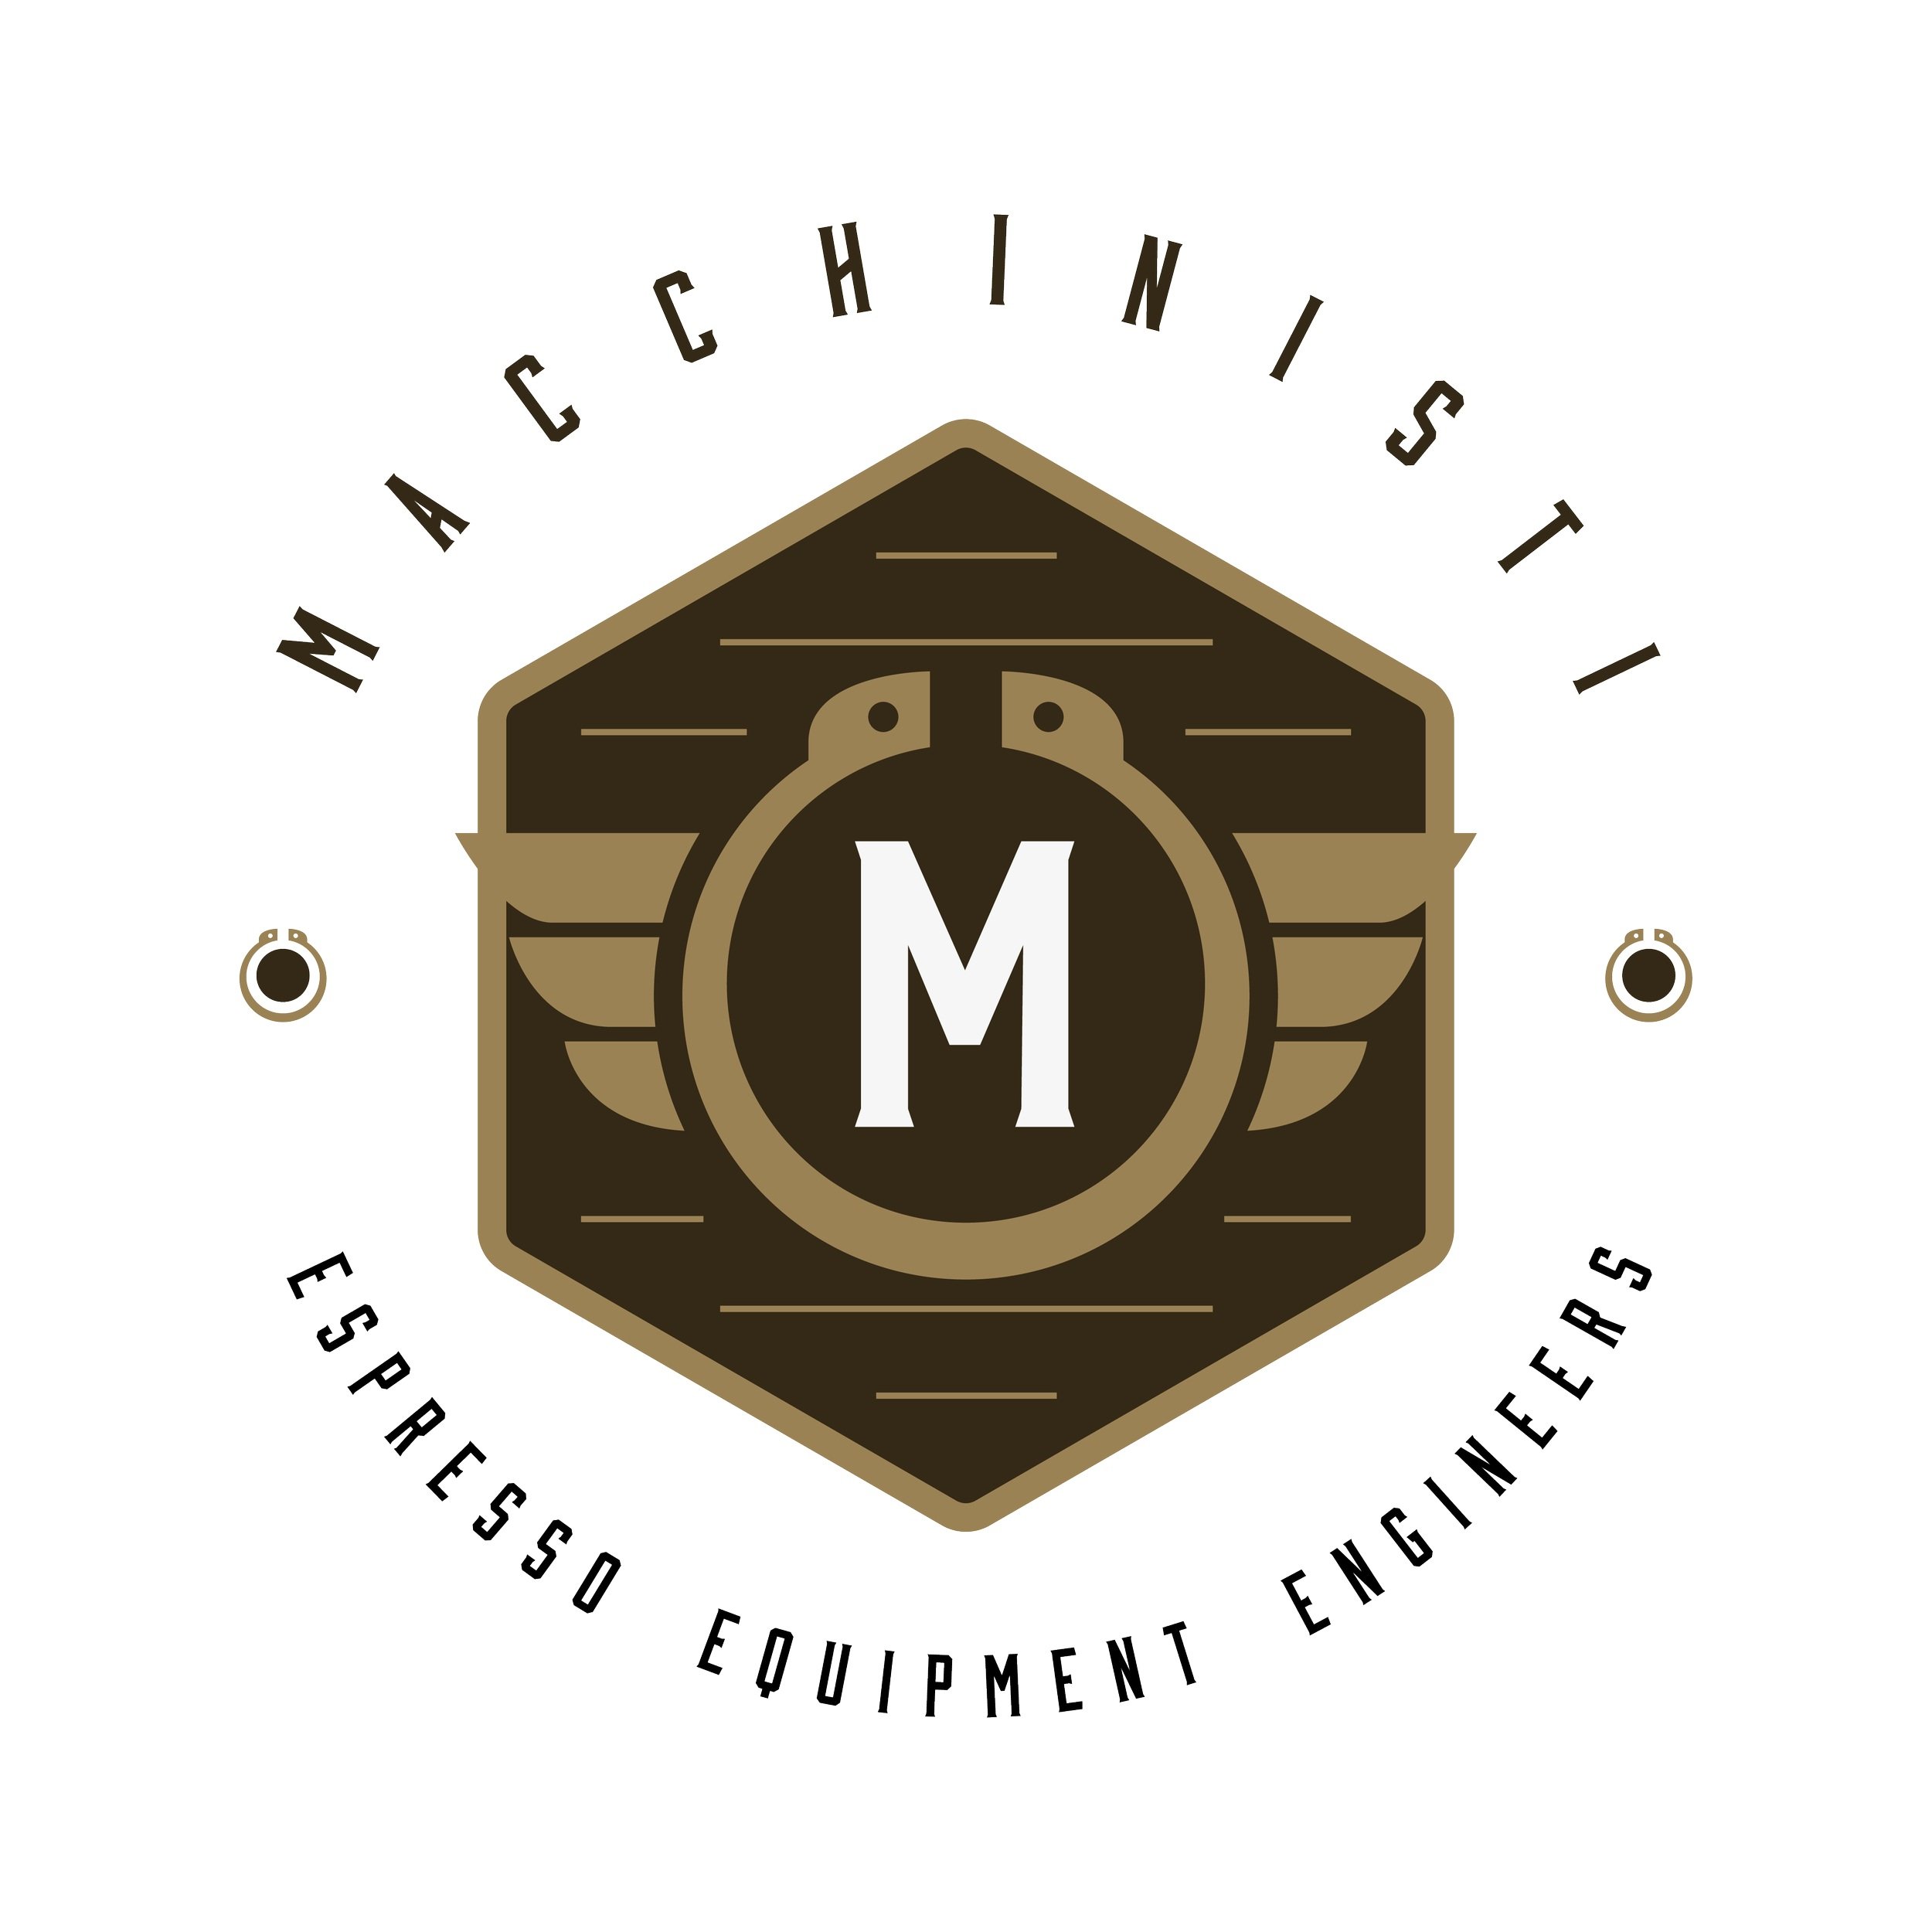 Macchinisti Espresso Engineers